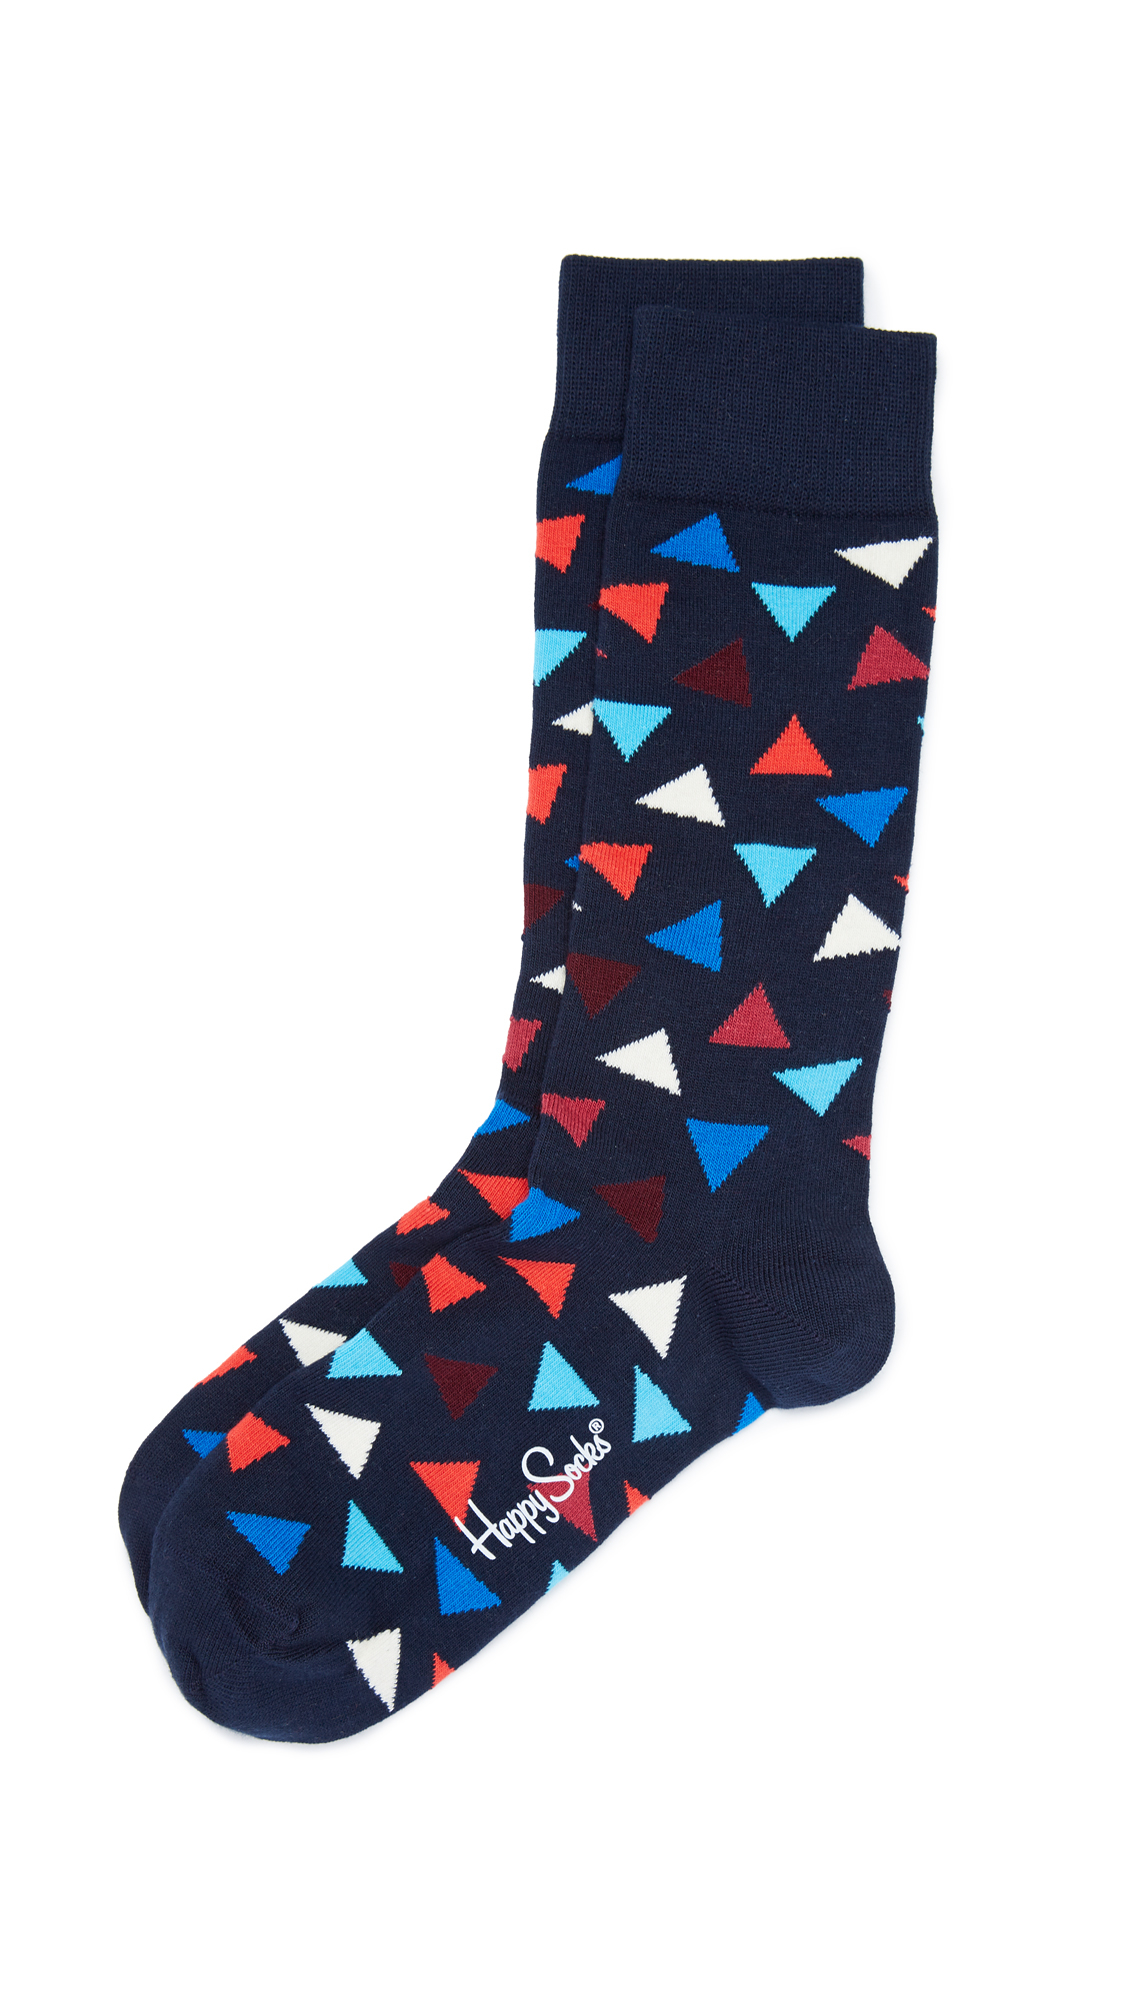 Lyst - Happy socks Triangle Socks in Blue for Men